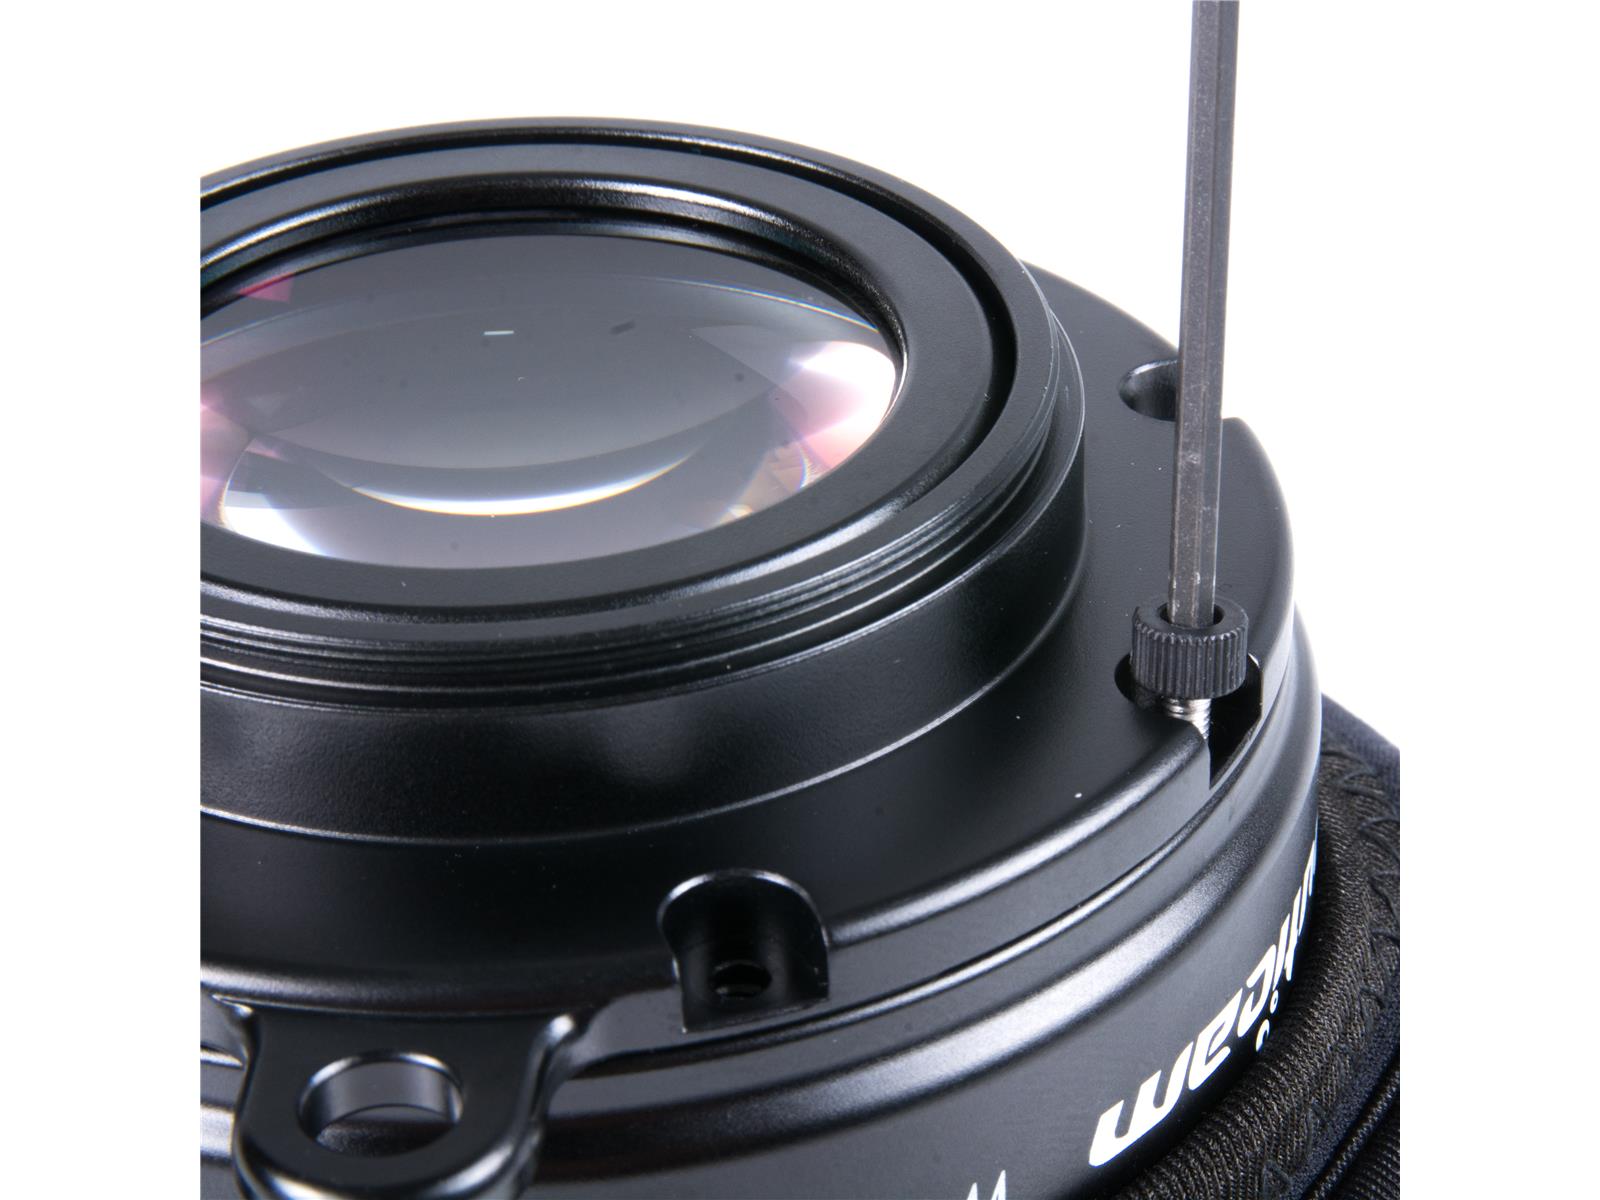 Wet Wide Lens 1 (WWL-1) by Nauticam